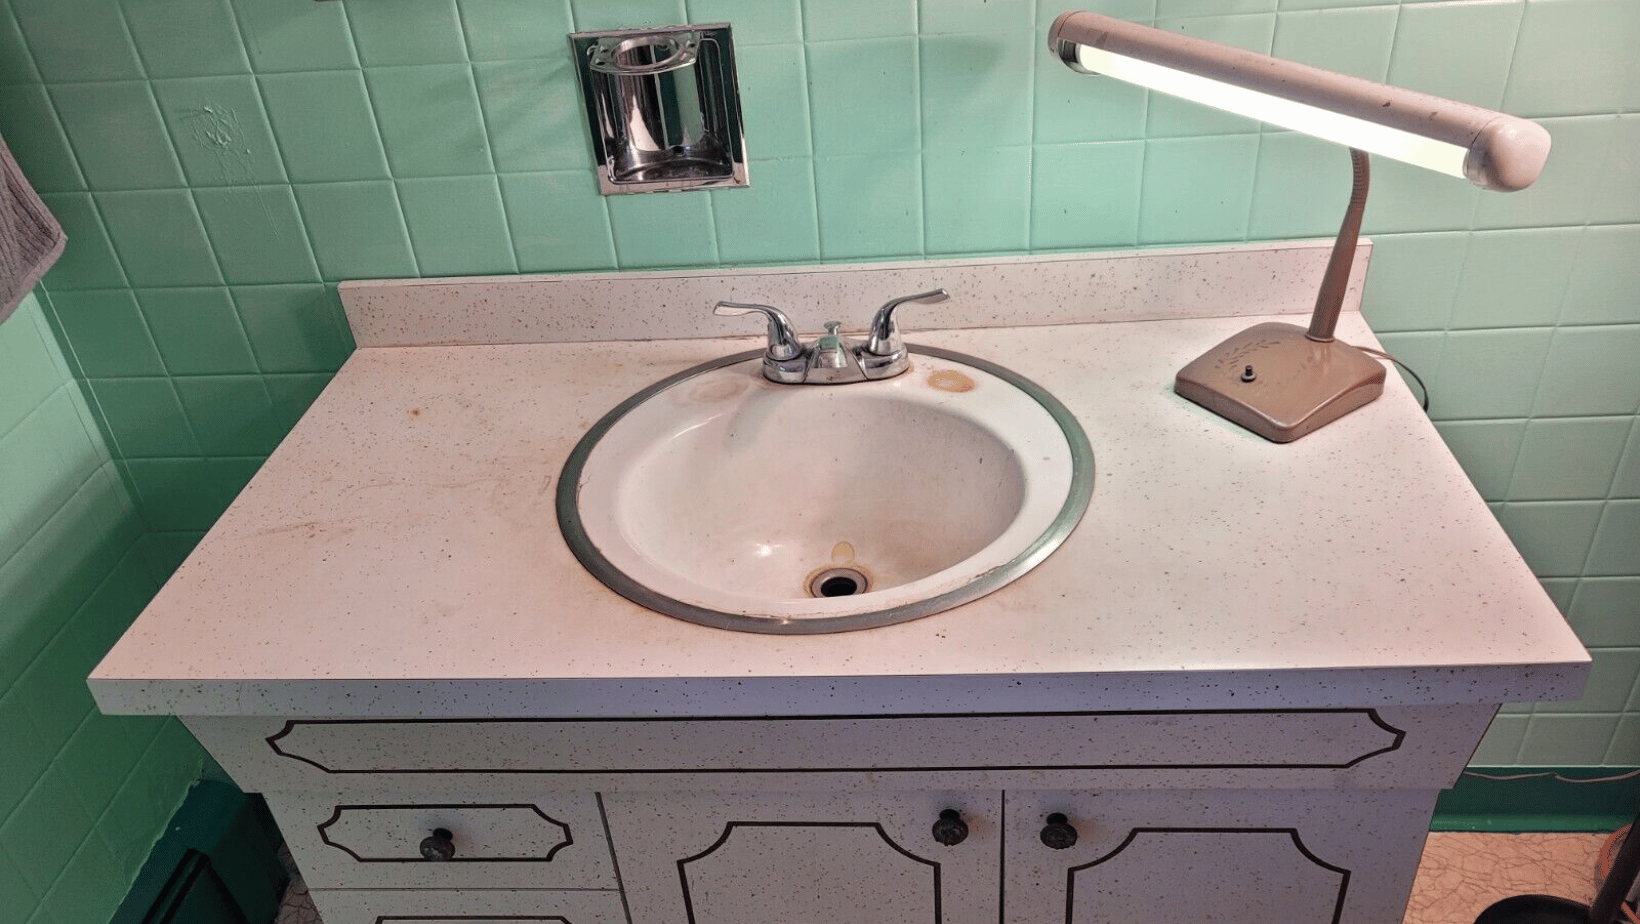 Used bathroom vanity with some glaring hygiene concerns.